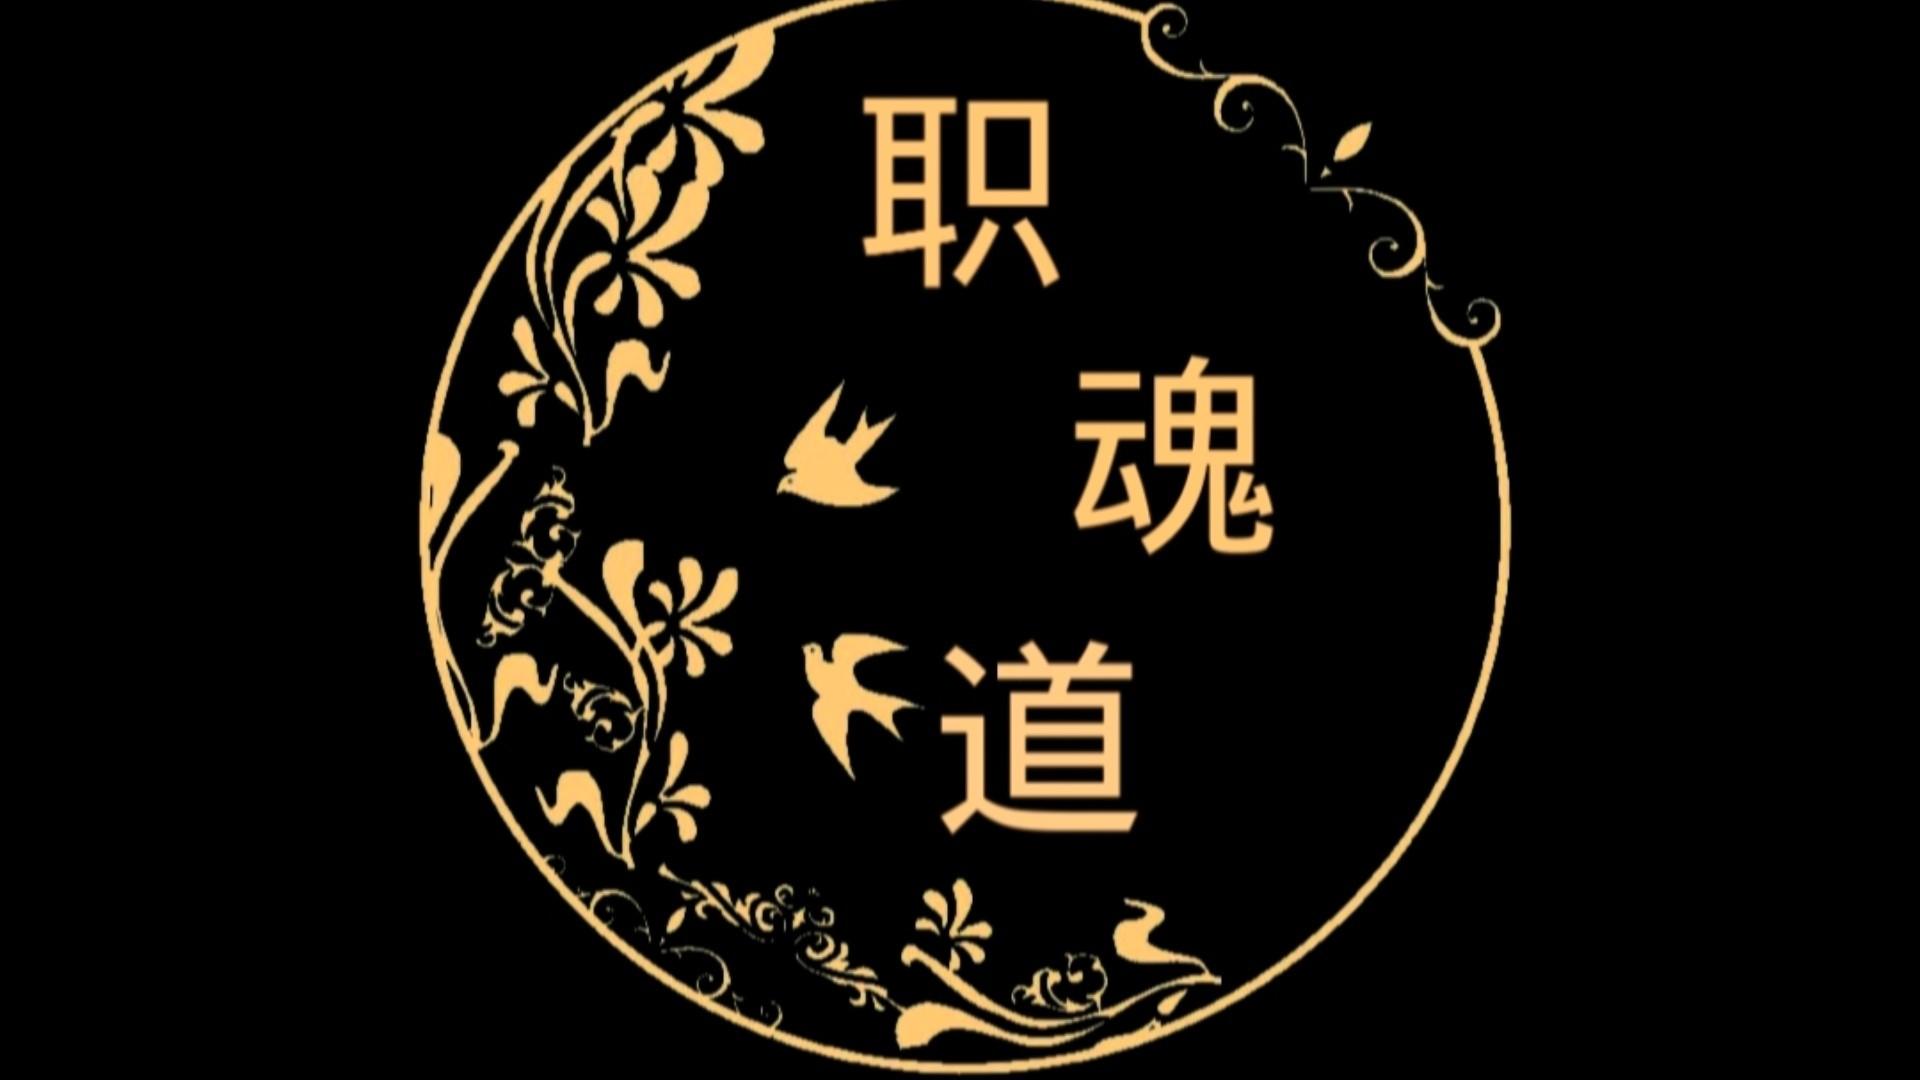 Banner of Jiwa profesional 